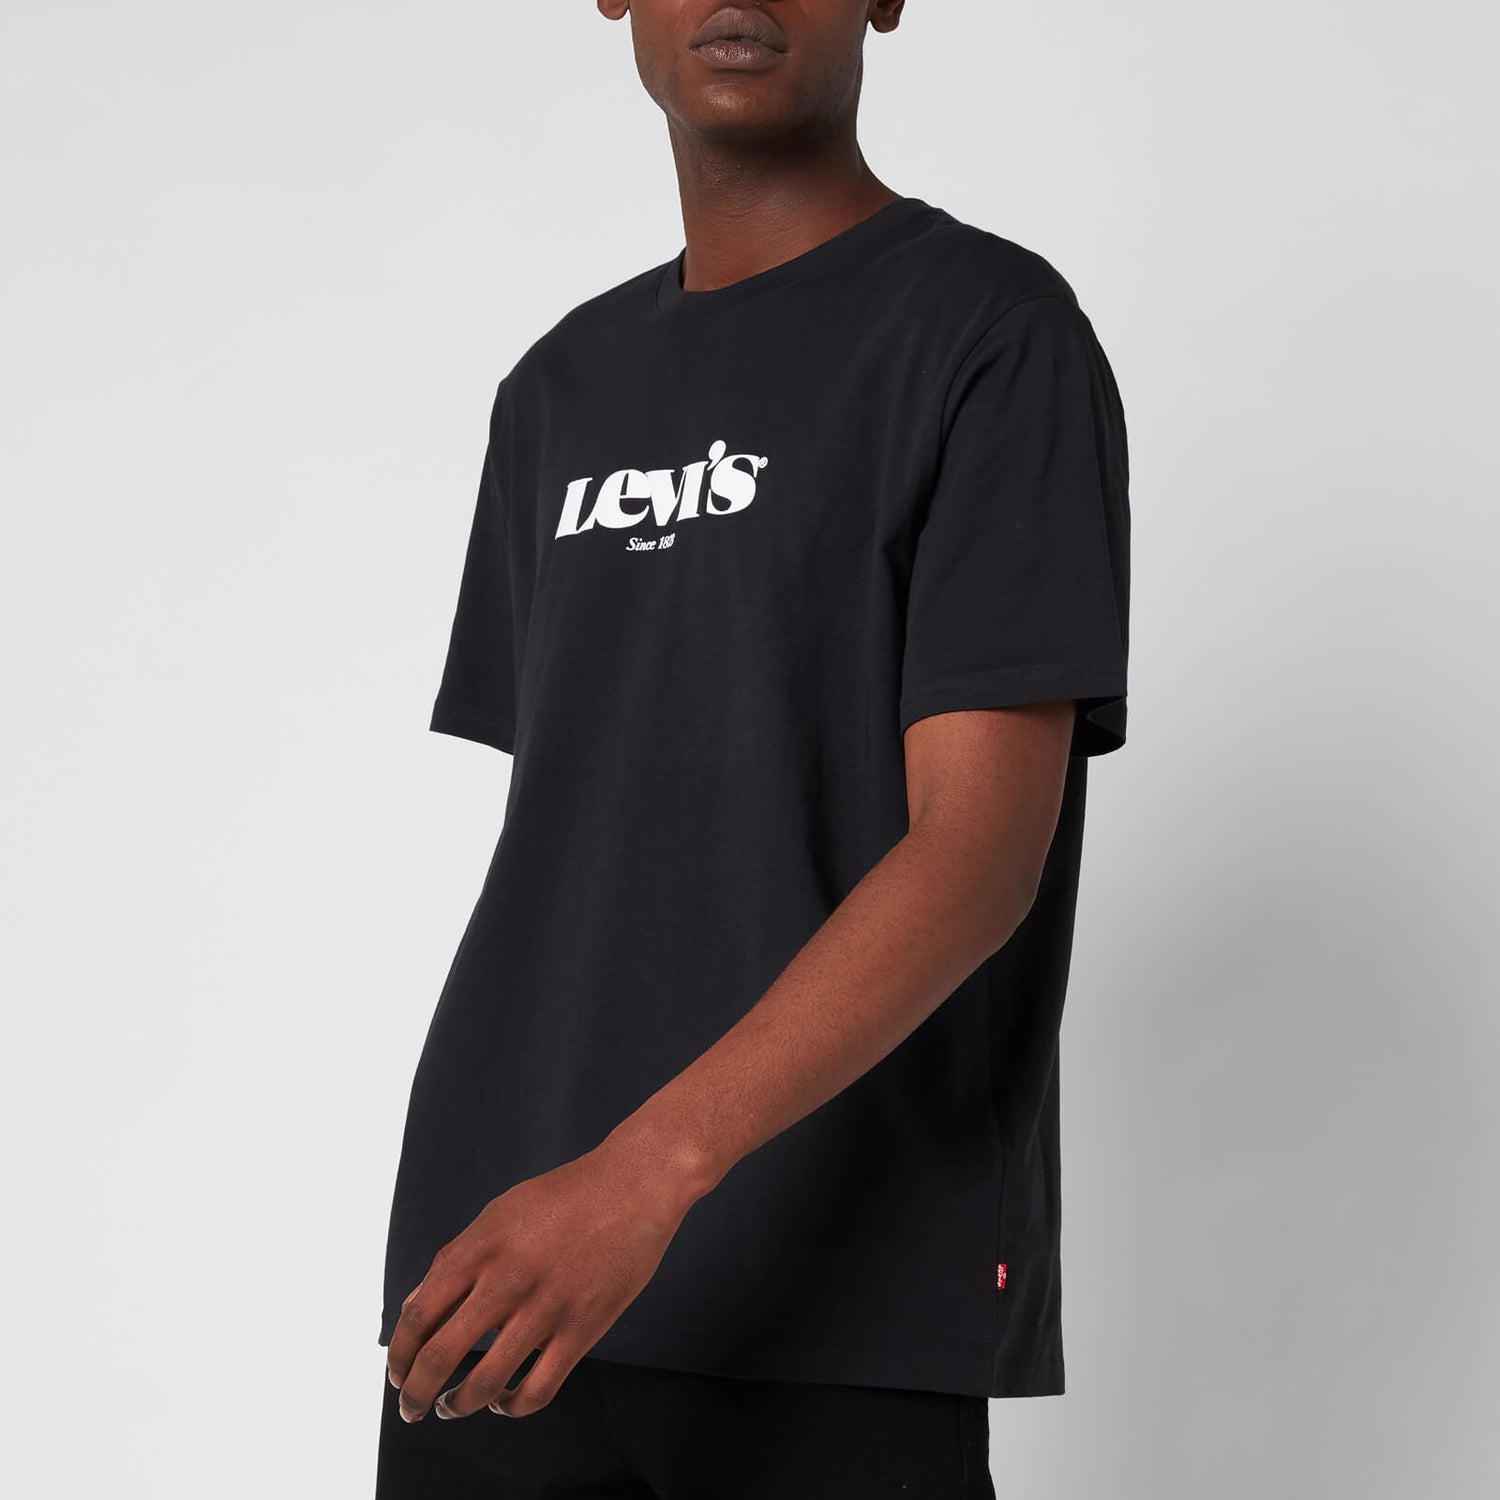 Levi's Men's Relaxed Fit T-Shirt - Caviar Black